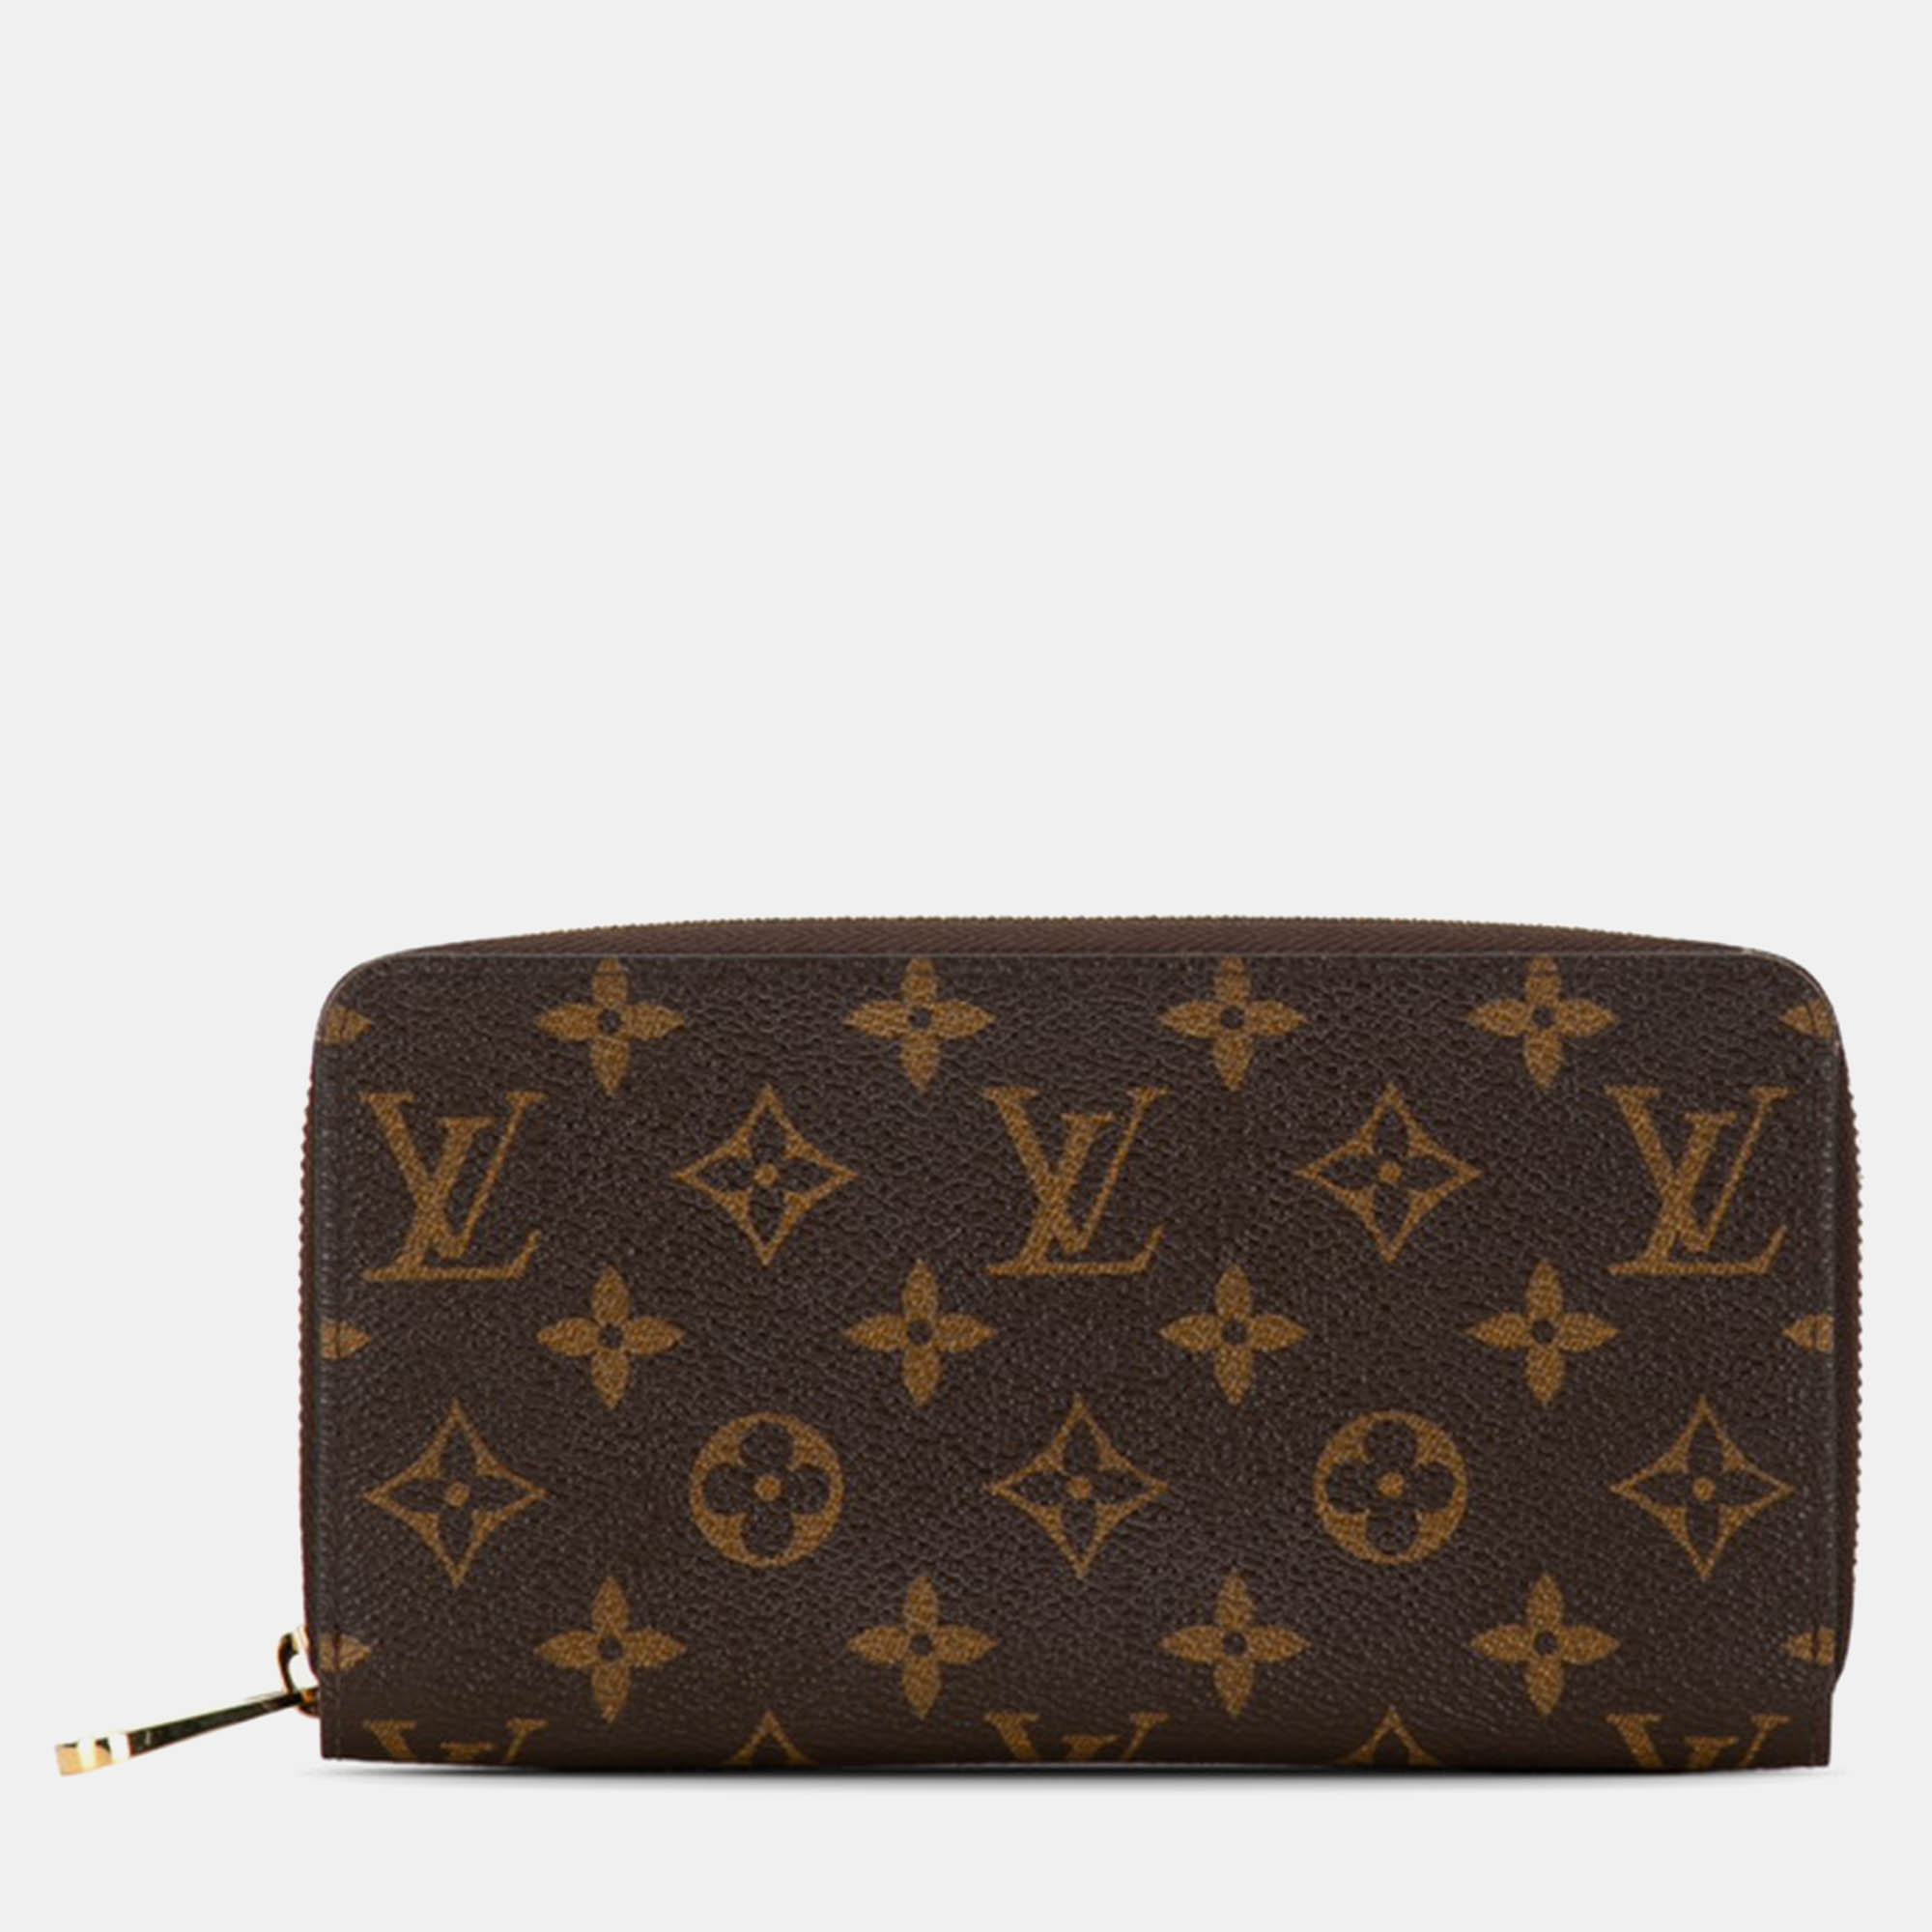 Louis vuitton brown monogram canvas zippy wallet